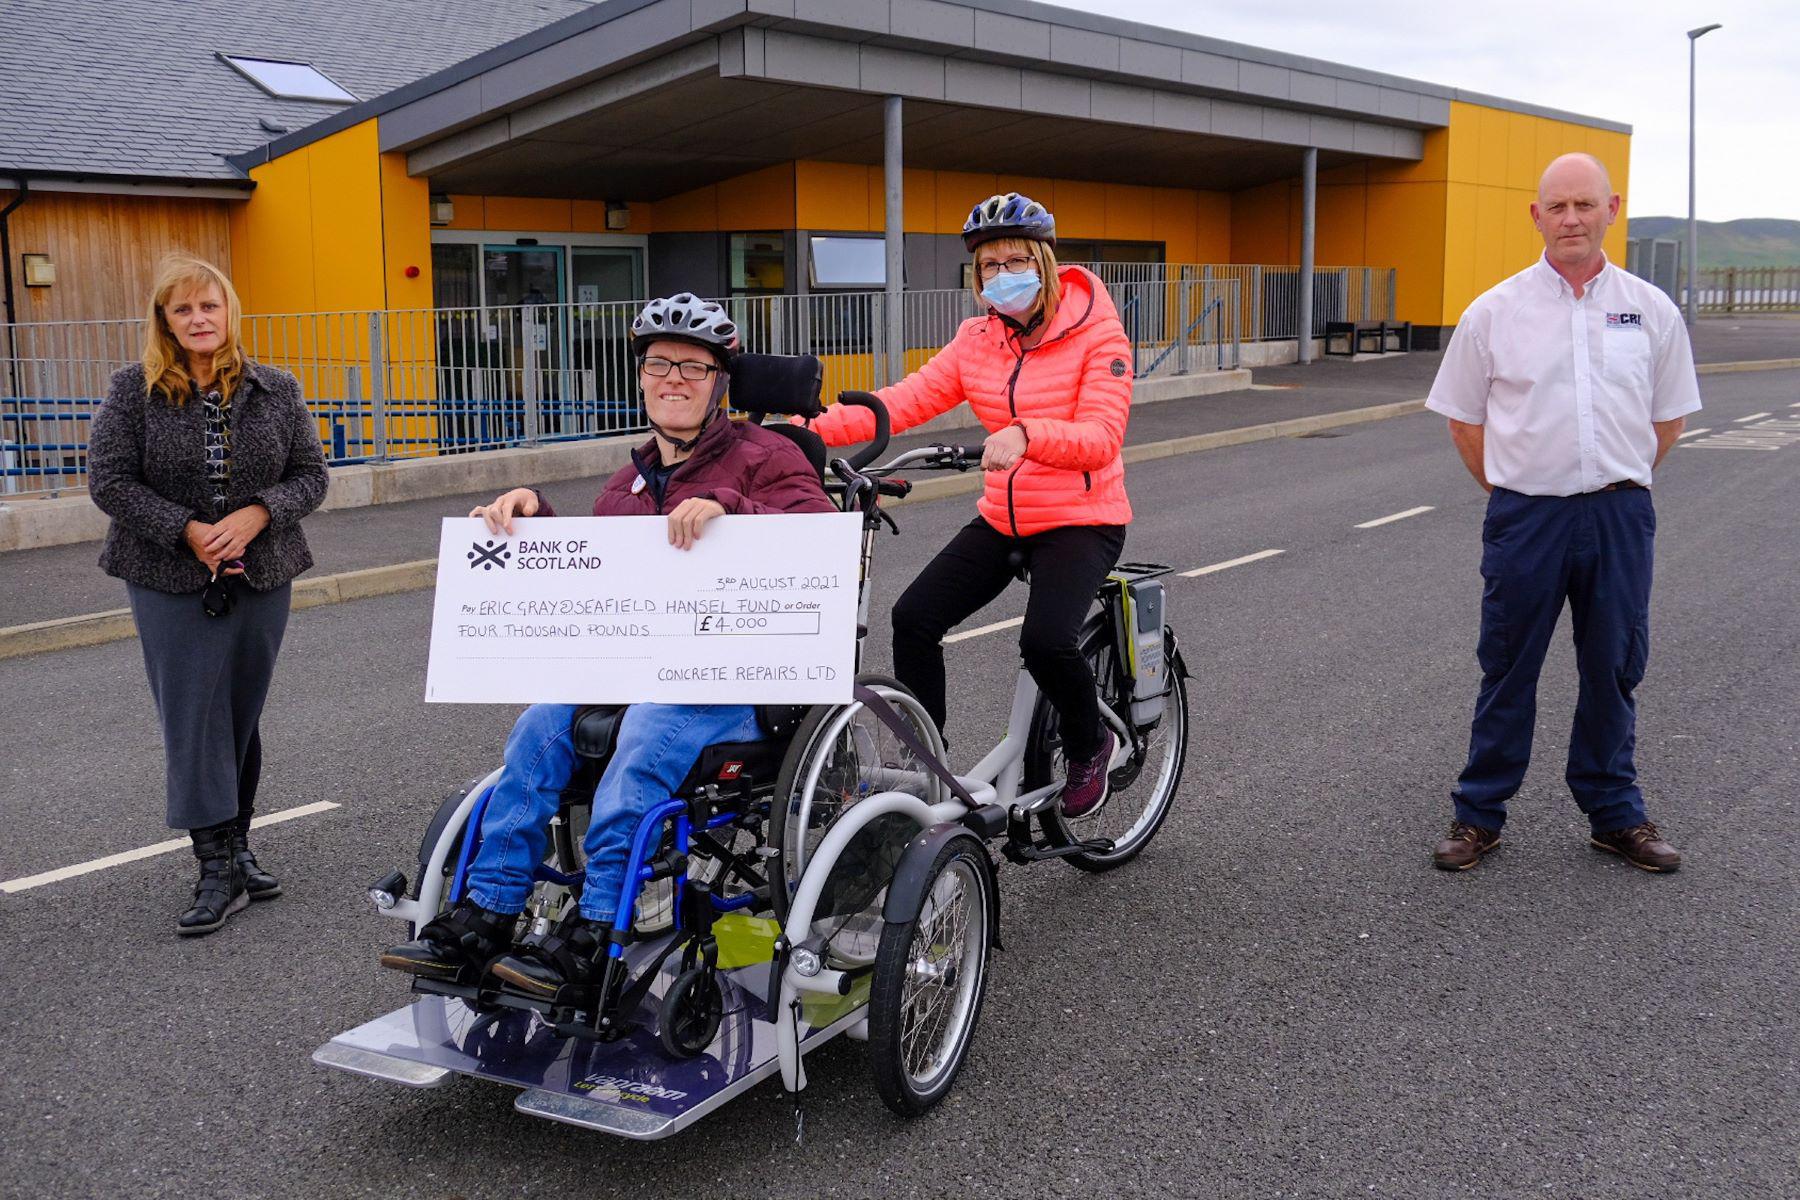 Eric gray cheque donation powered bike sml